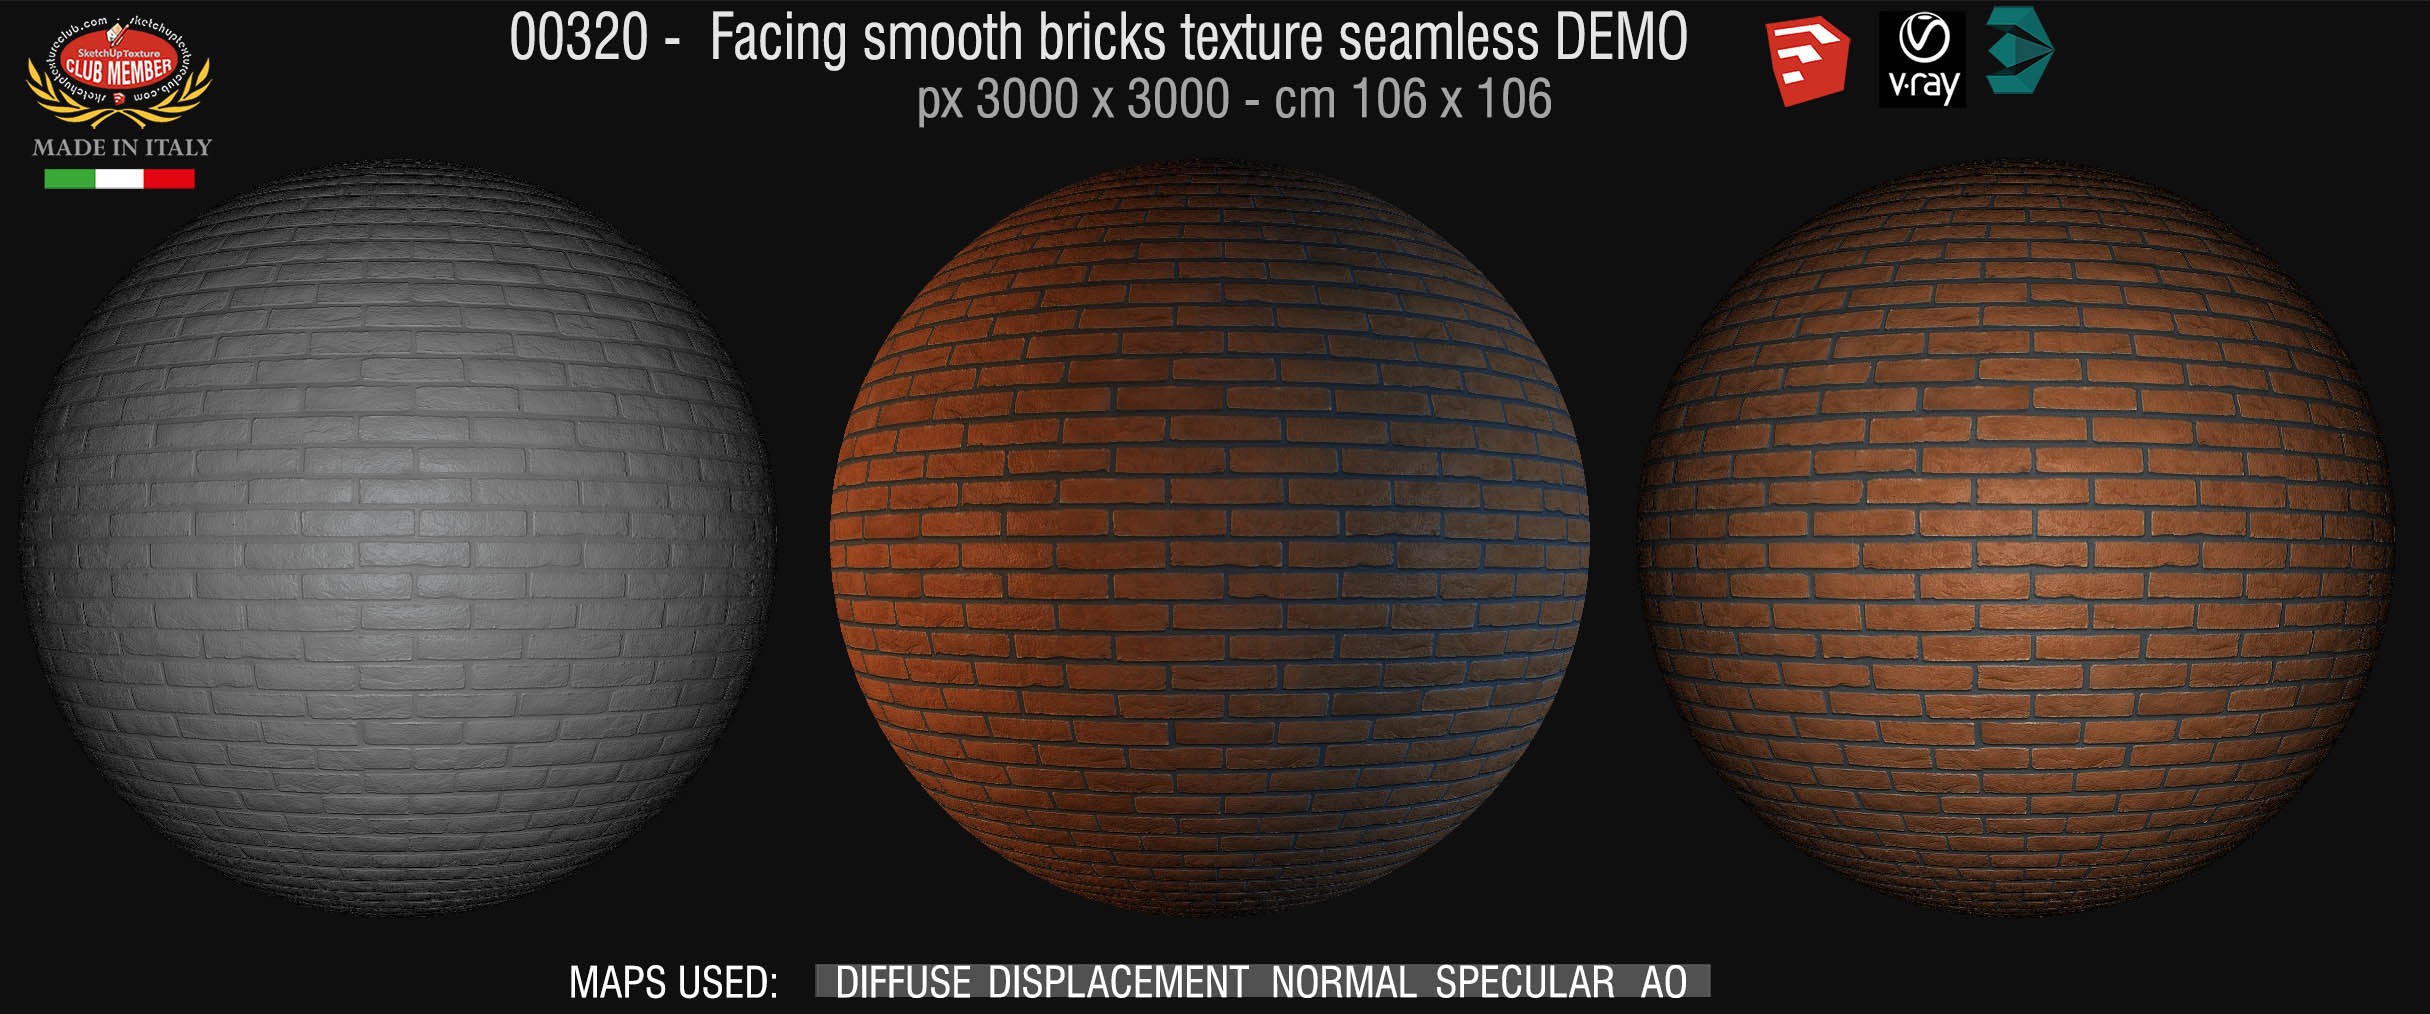 00320 Facing smooth bricks texture seamless + maps DEMO